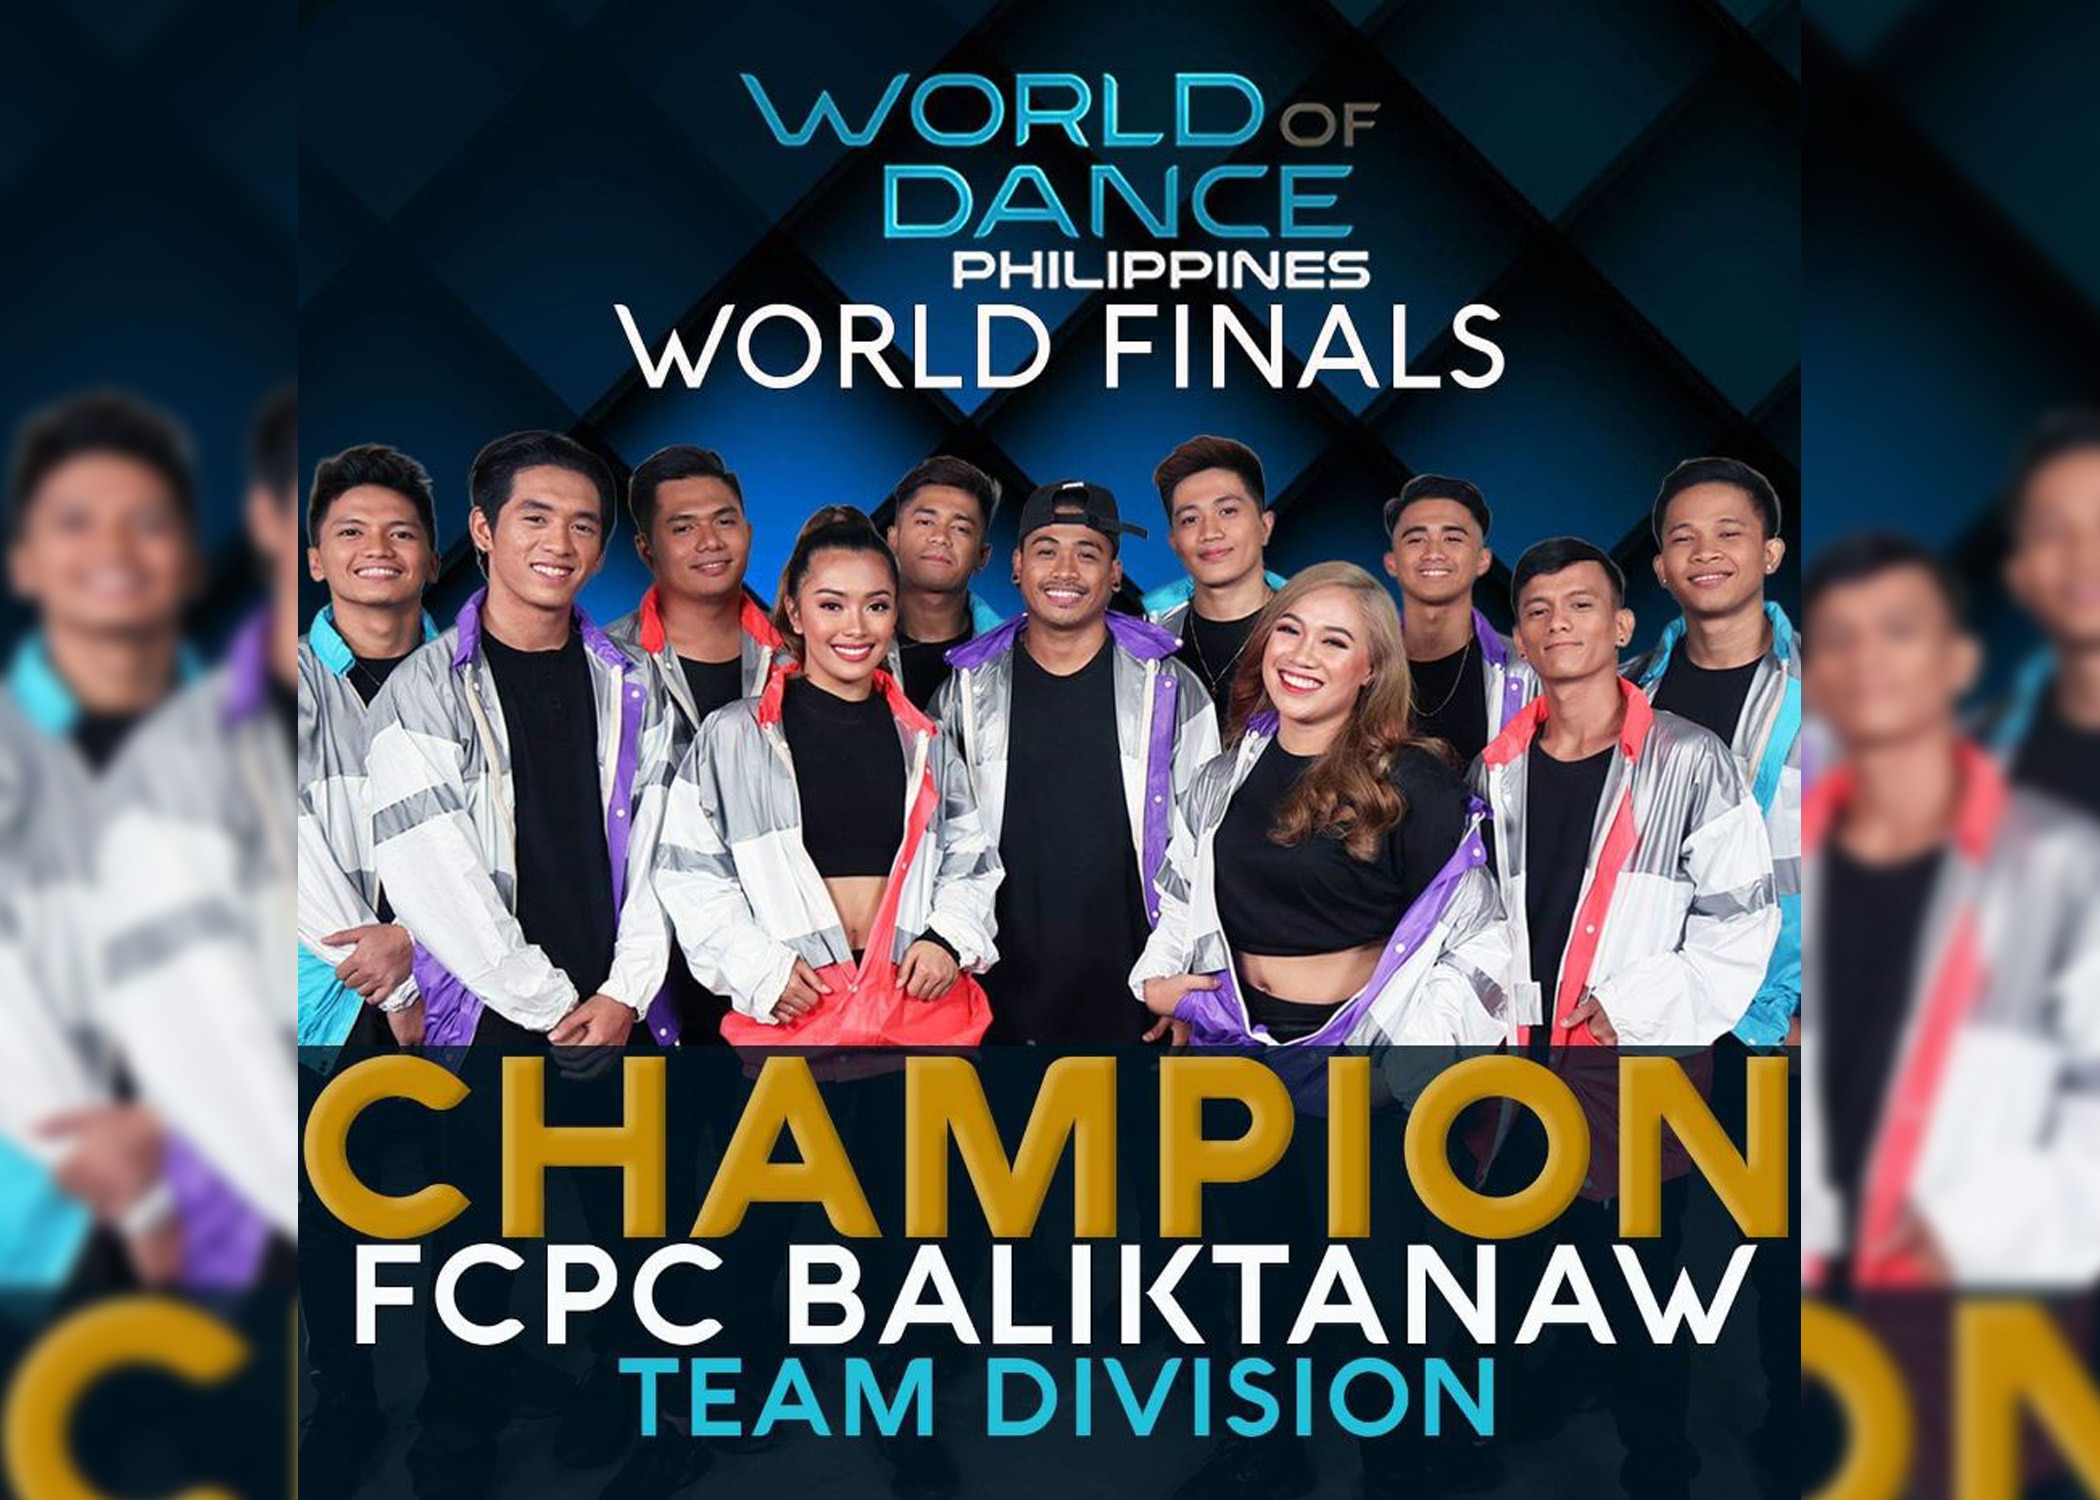 FCPC Baliktanaw is firstever "World of Dance Philippines" champion